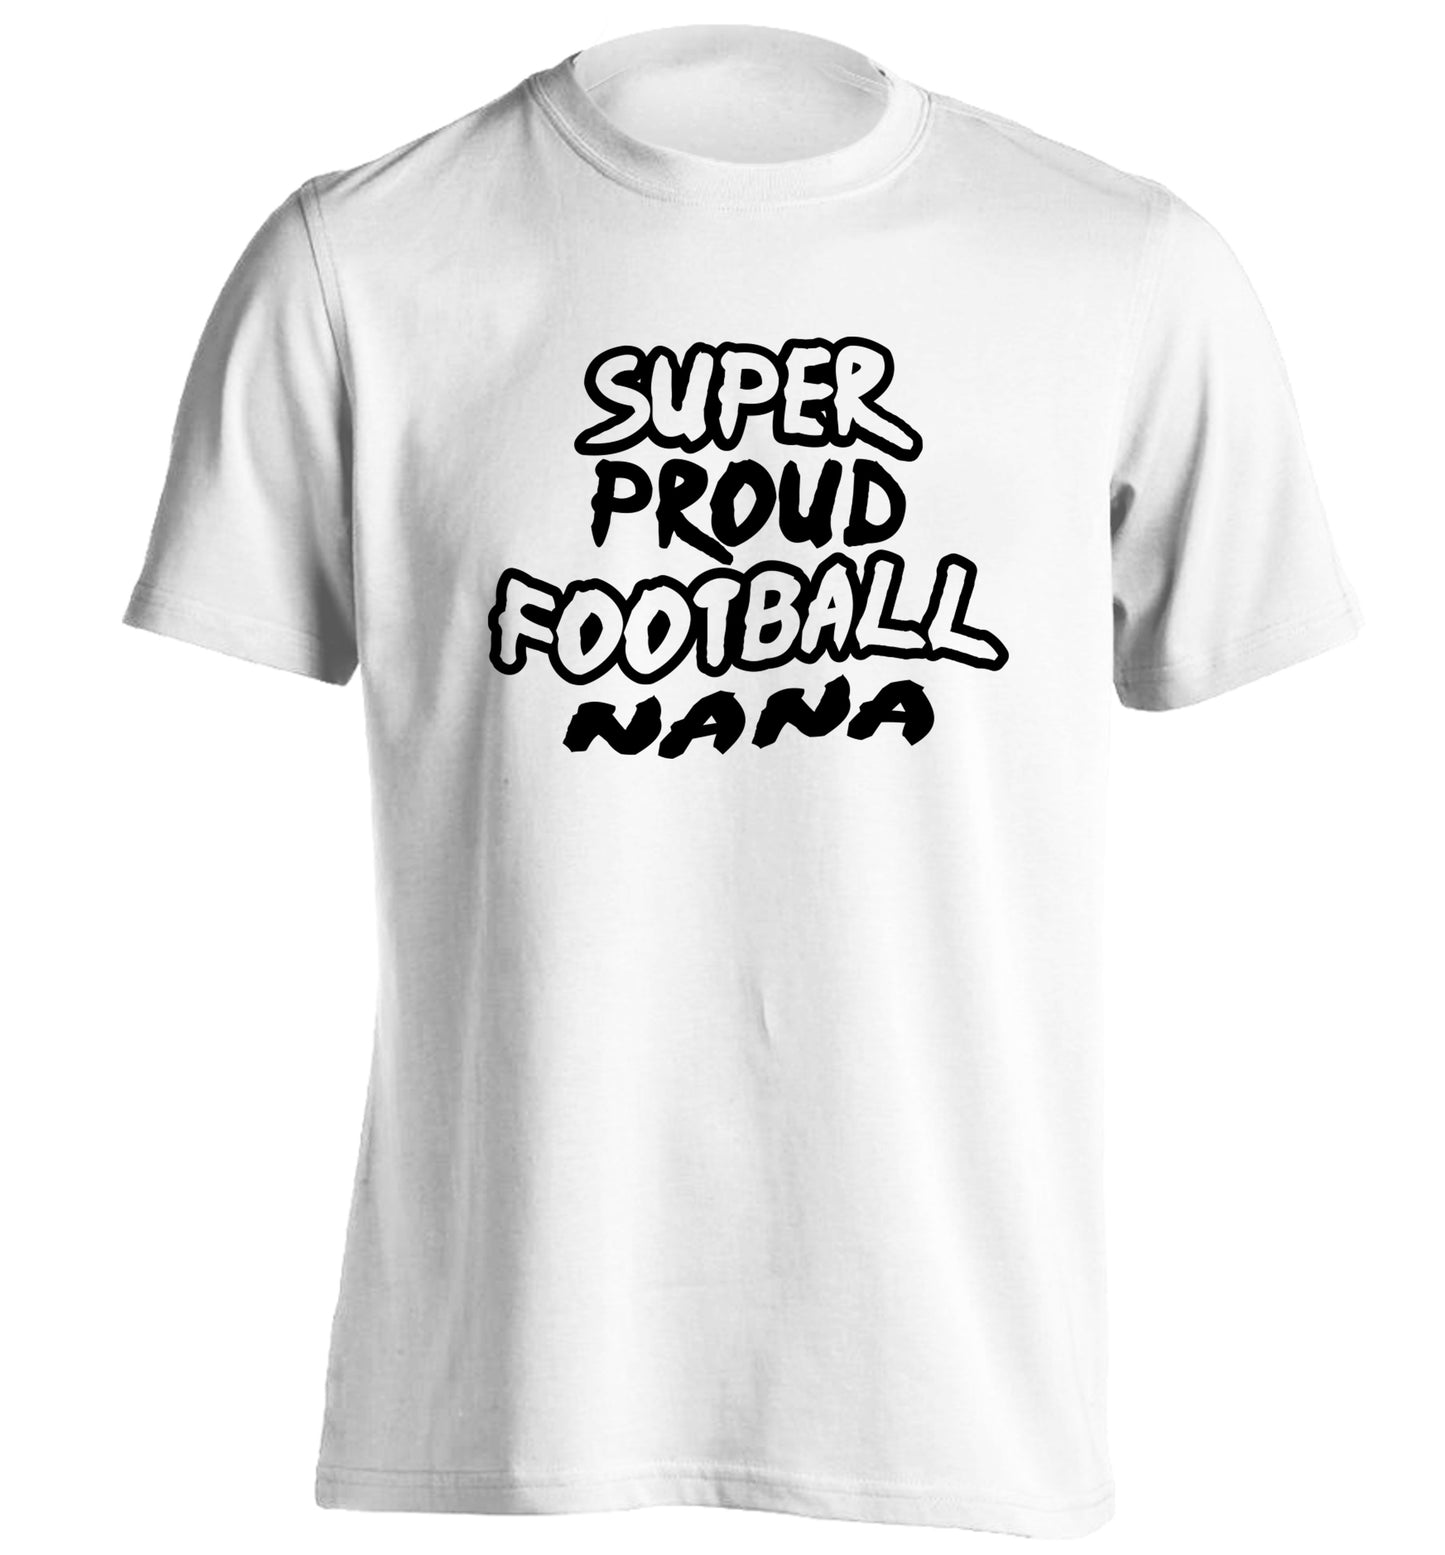 Super proud football nana adults unisexwhite Tshirt 2XL